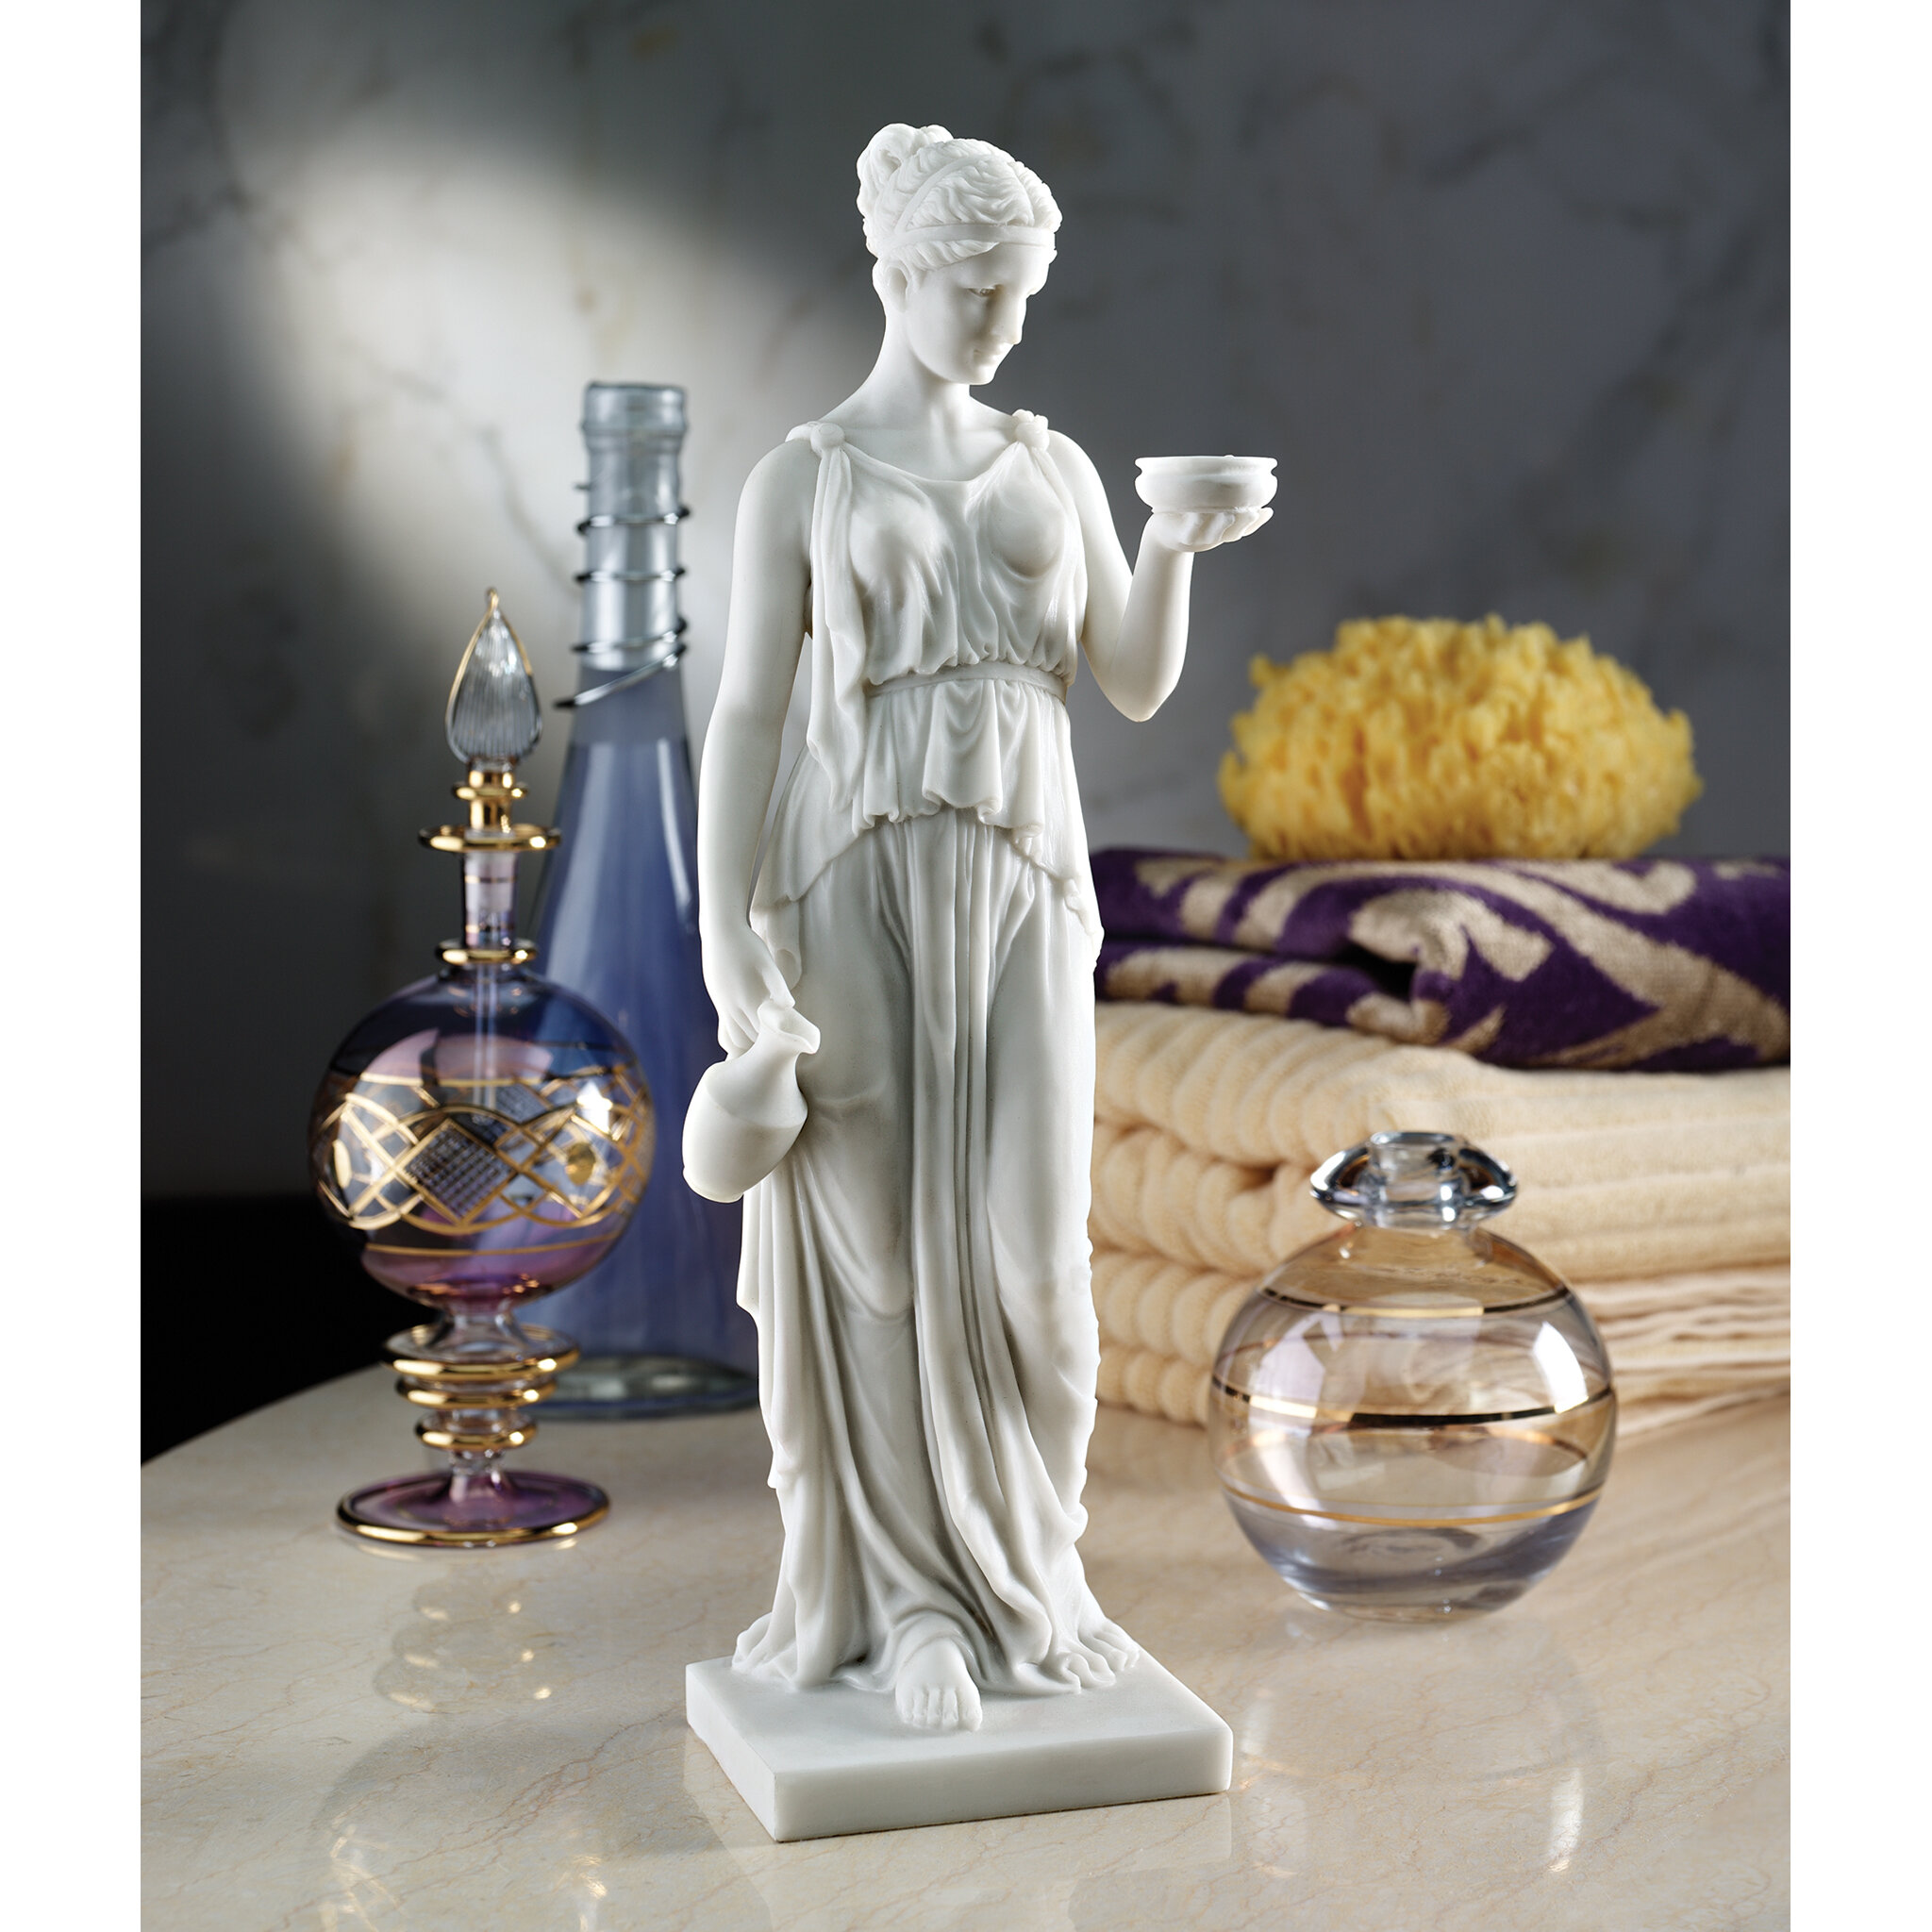 Design Toscano Hebe, the Goddess of Youth Figurine  Reviews | Wayfair